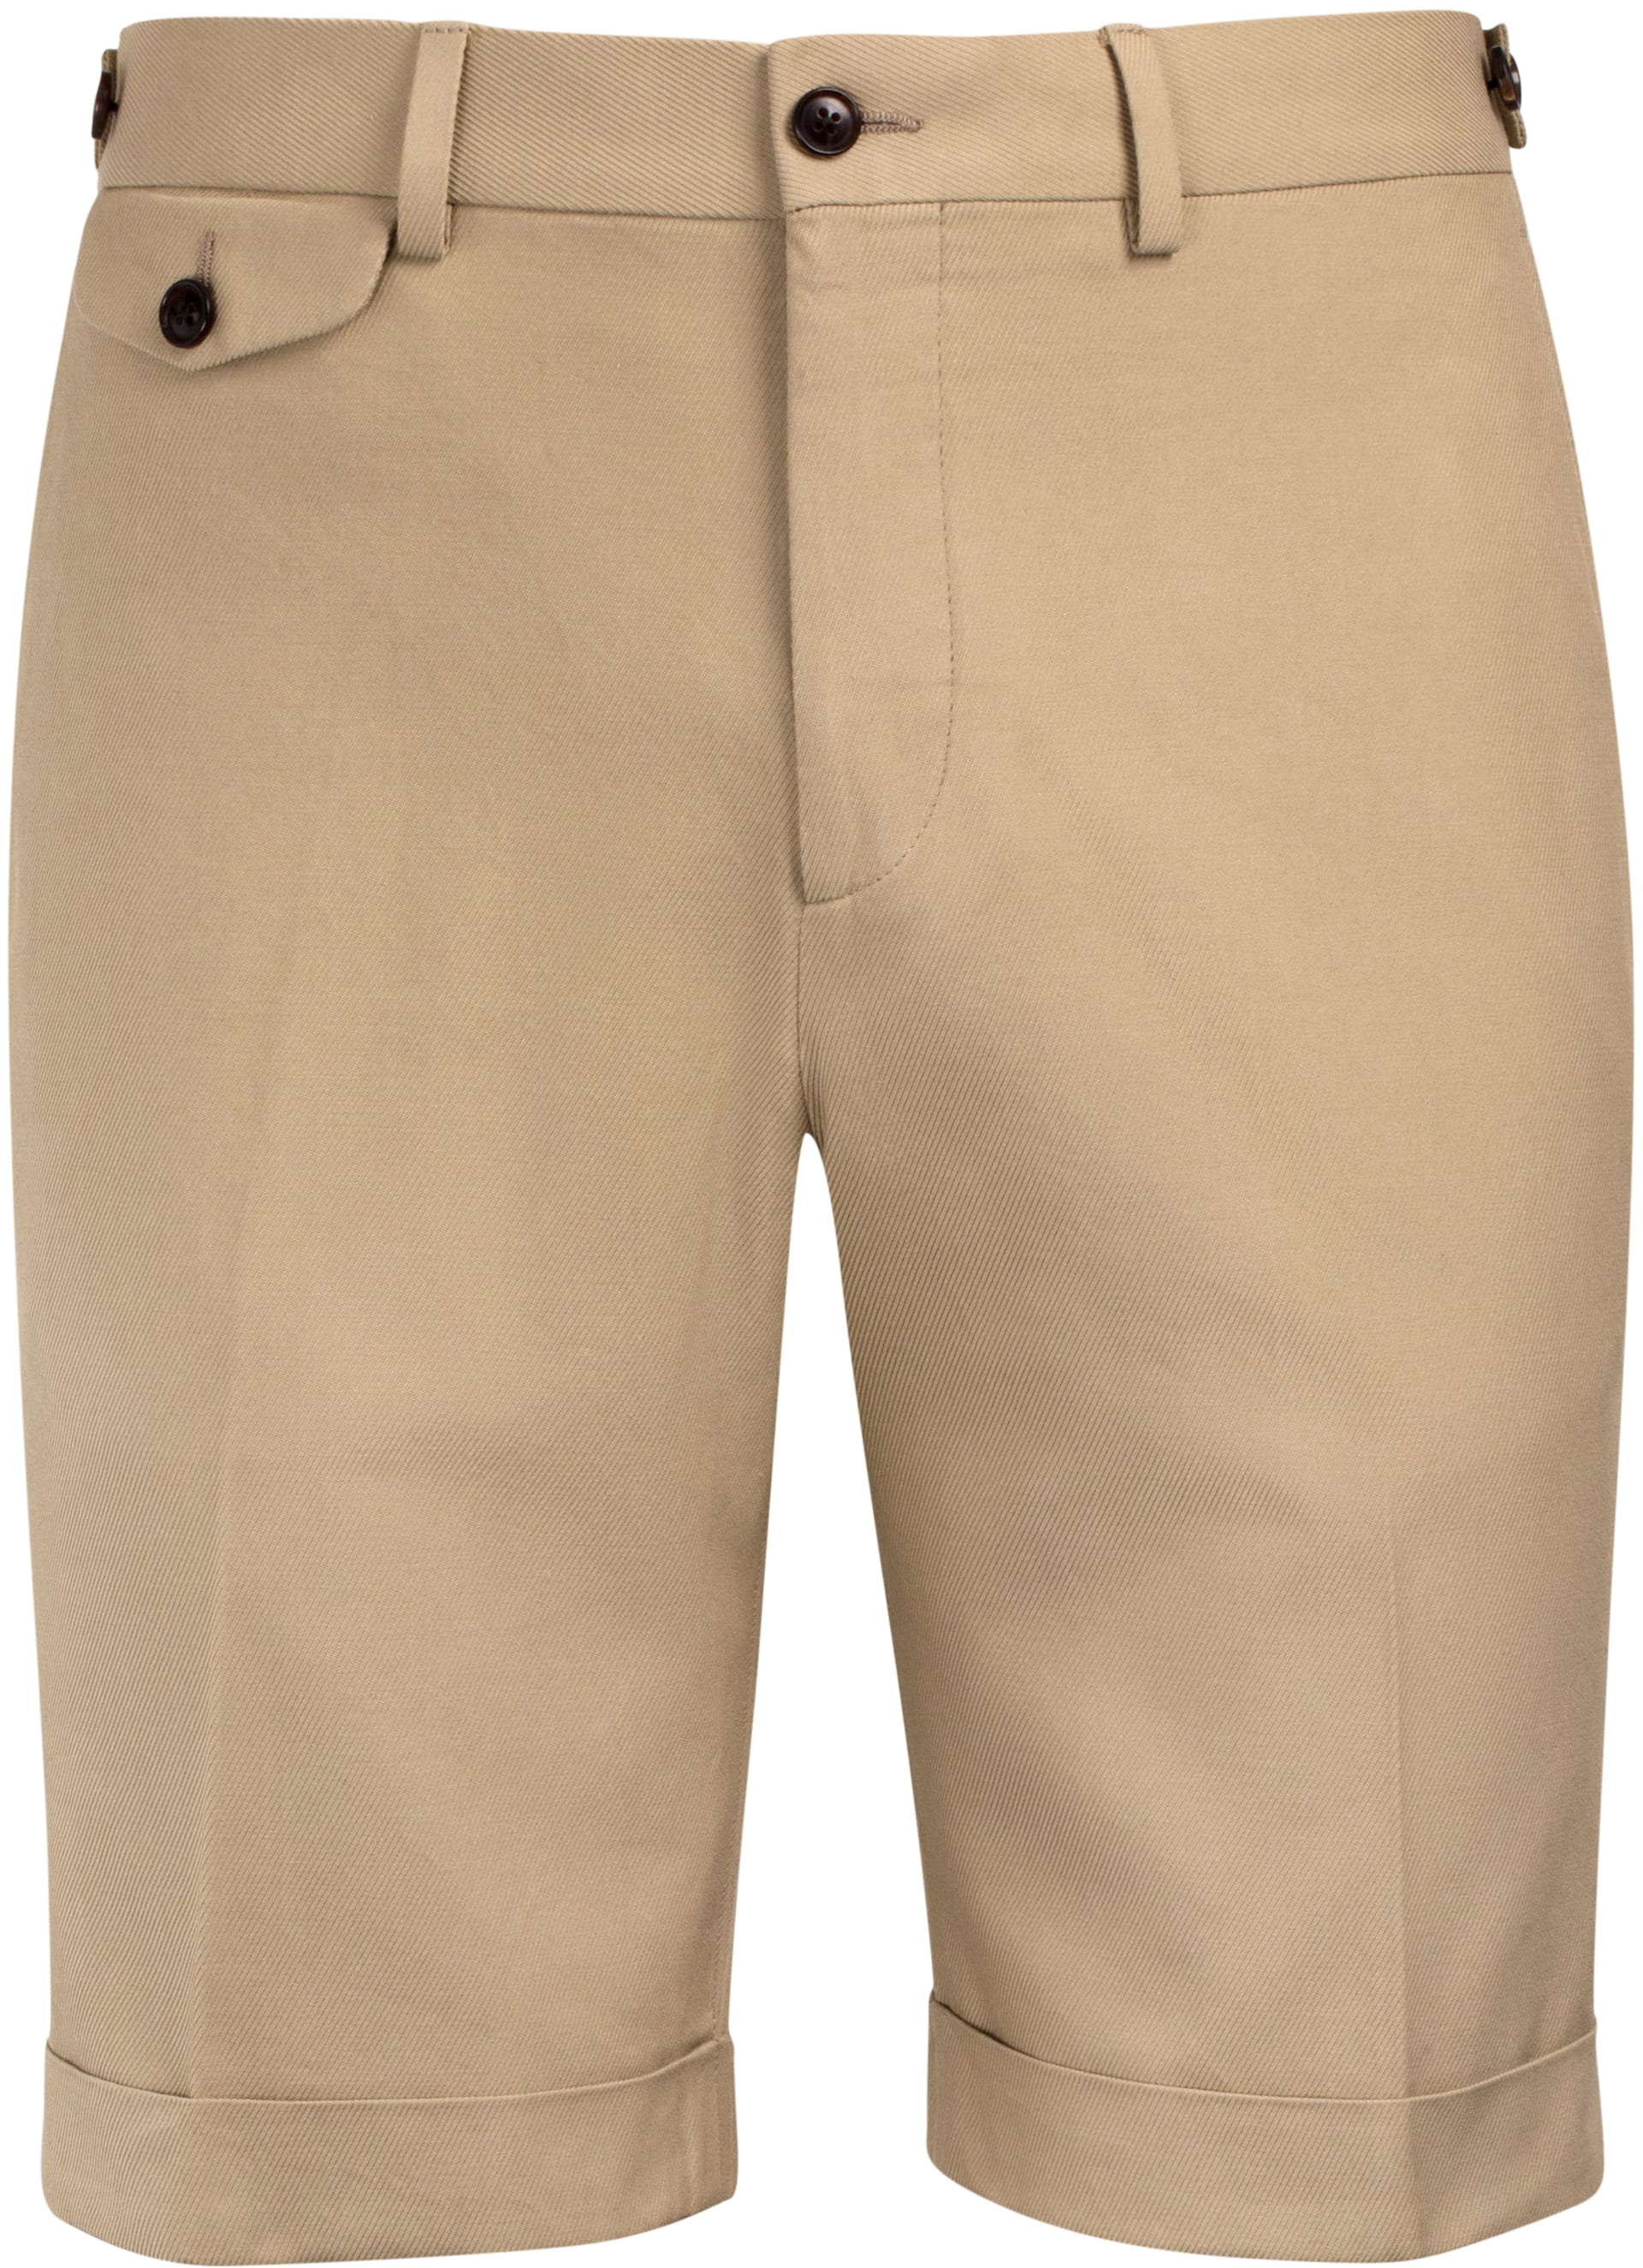 Jort Khaki Shorts B996i | Suitsupply Online Store